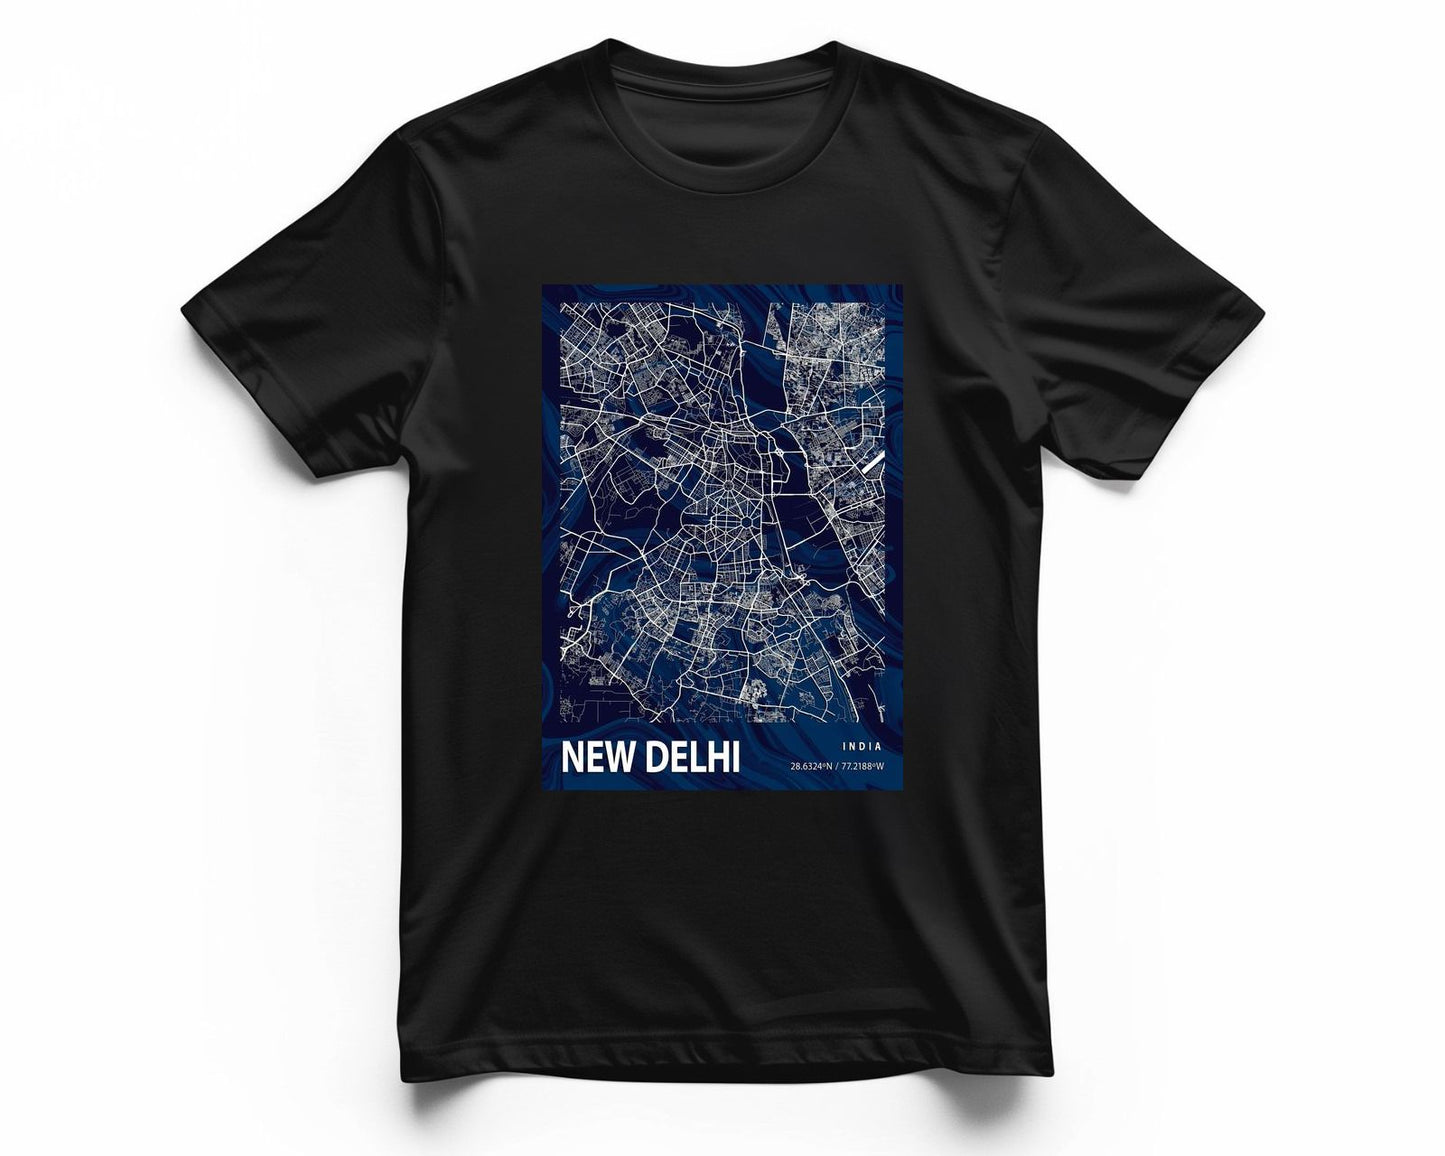 NEW DELHI CROCUS MARBLE MAP  - @Helios